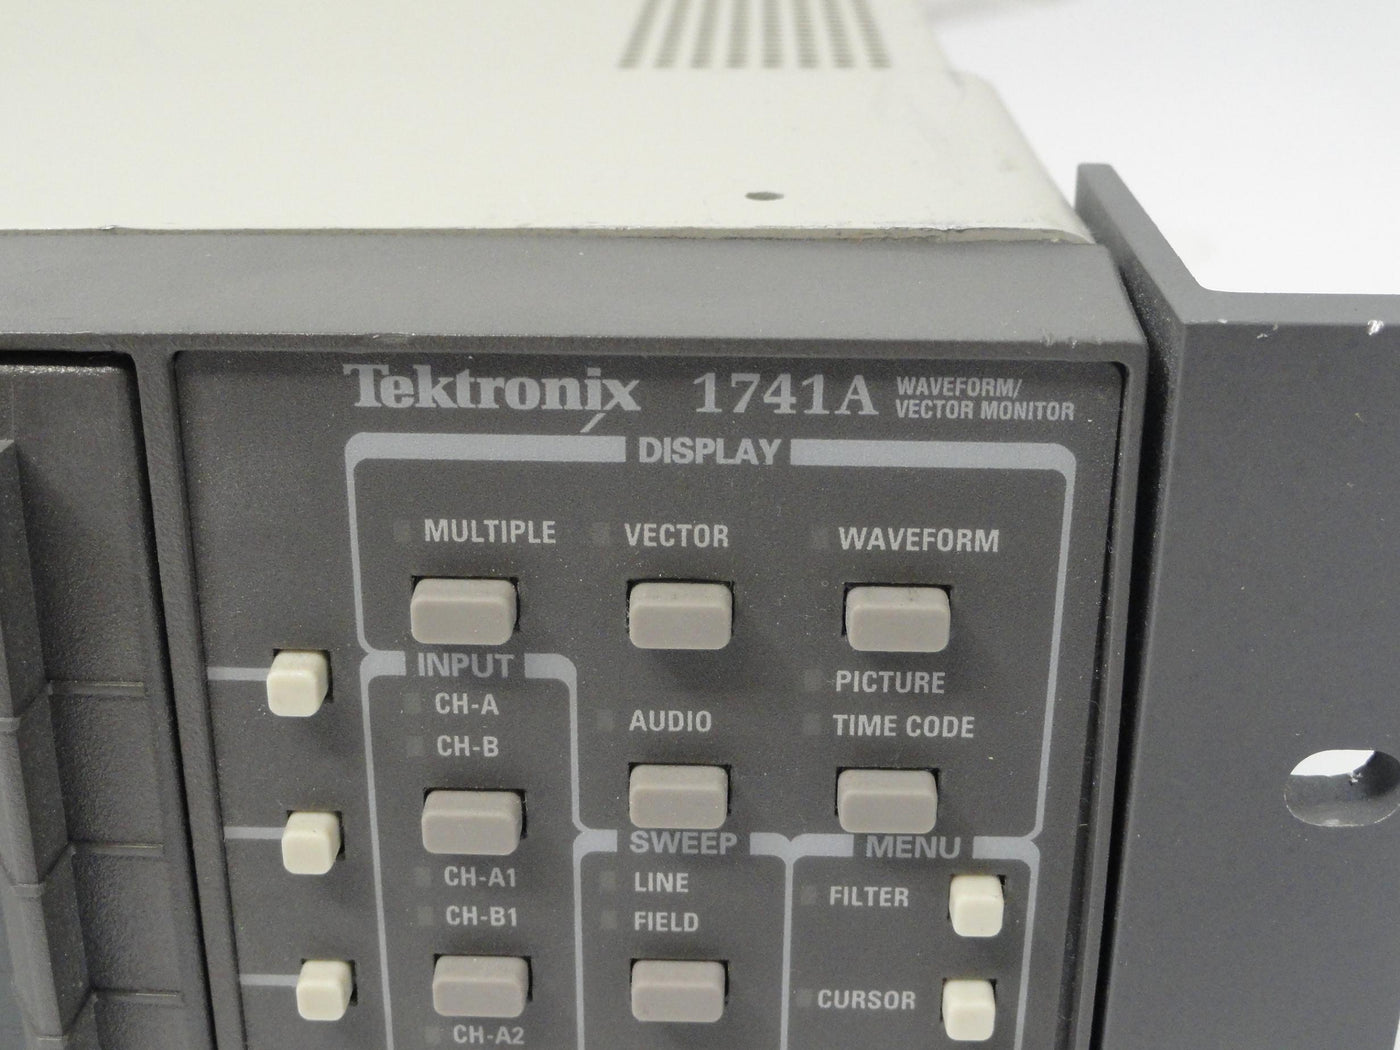 PR14274_1741A_Tektronix Vector/Waveform Monitor - Image4